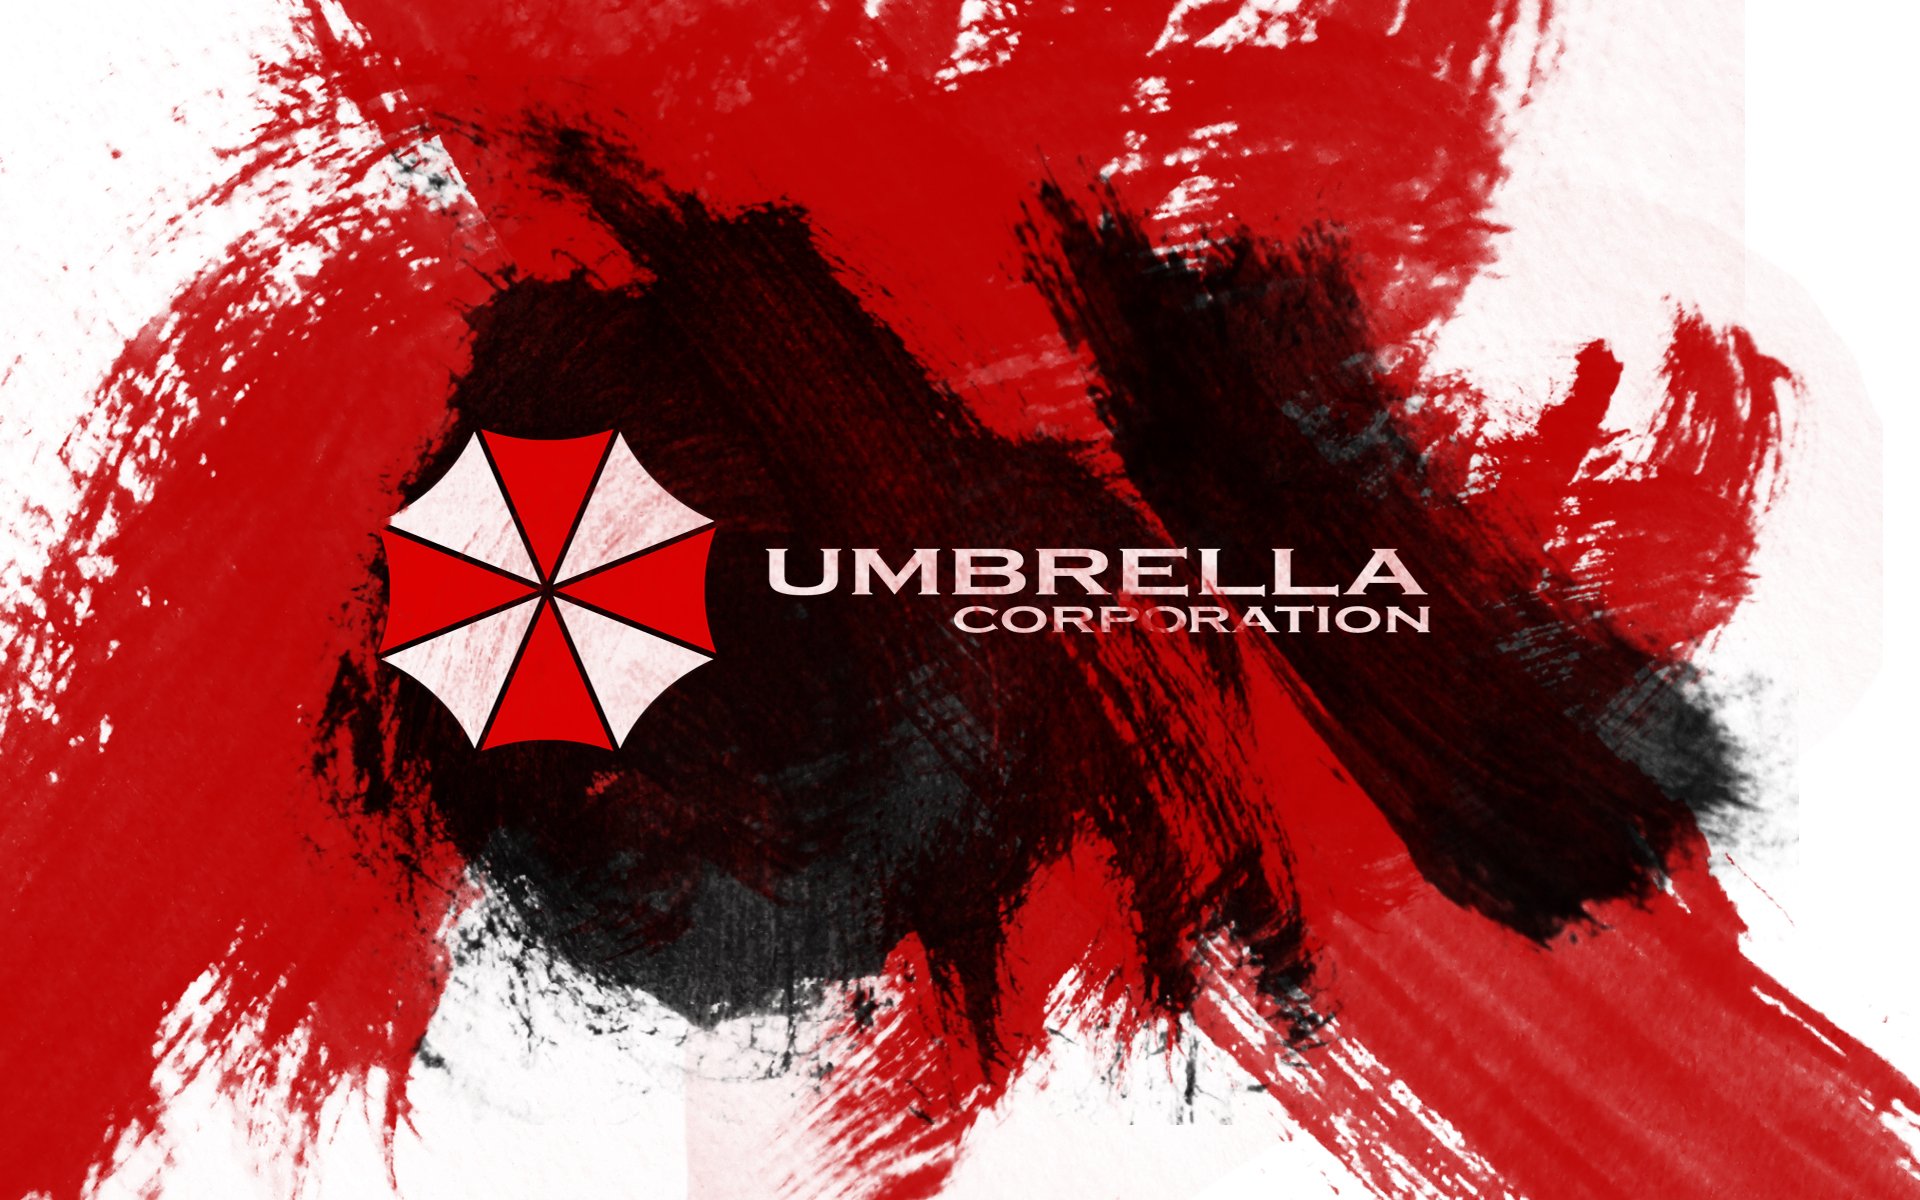 Umbrella Corporation Wallpapers  Full HD wallpaper search